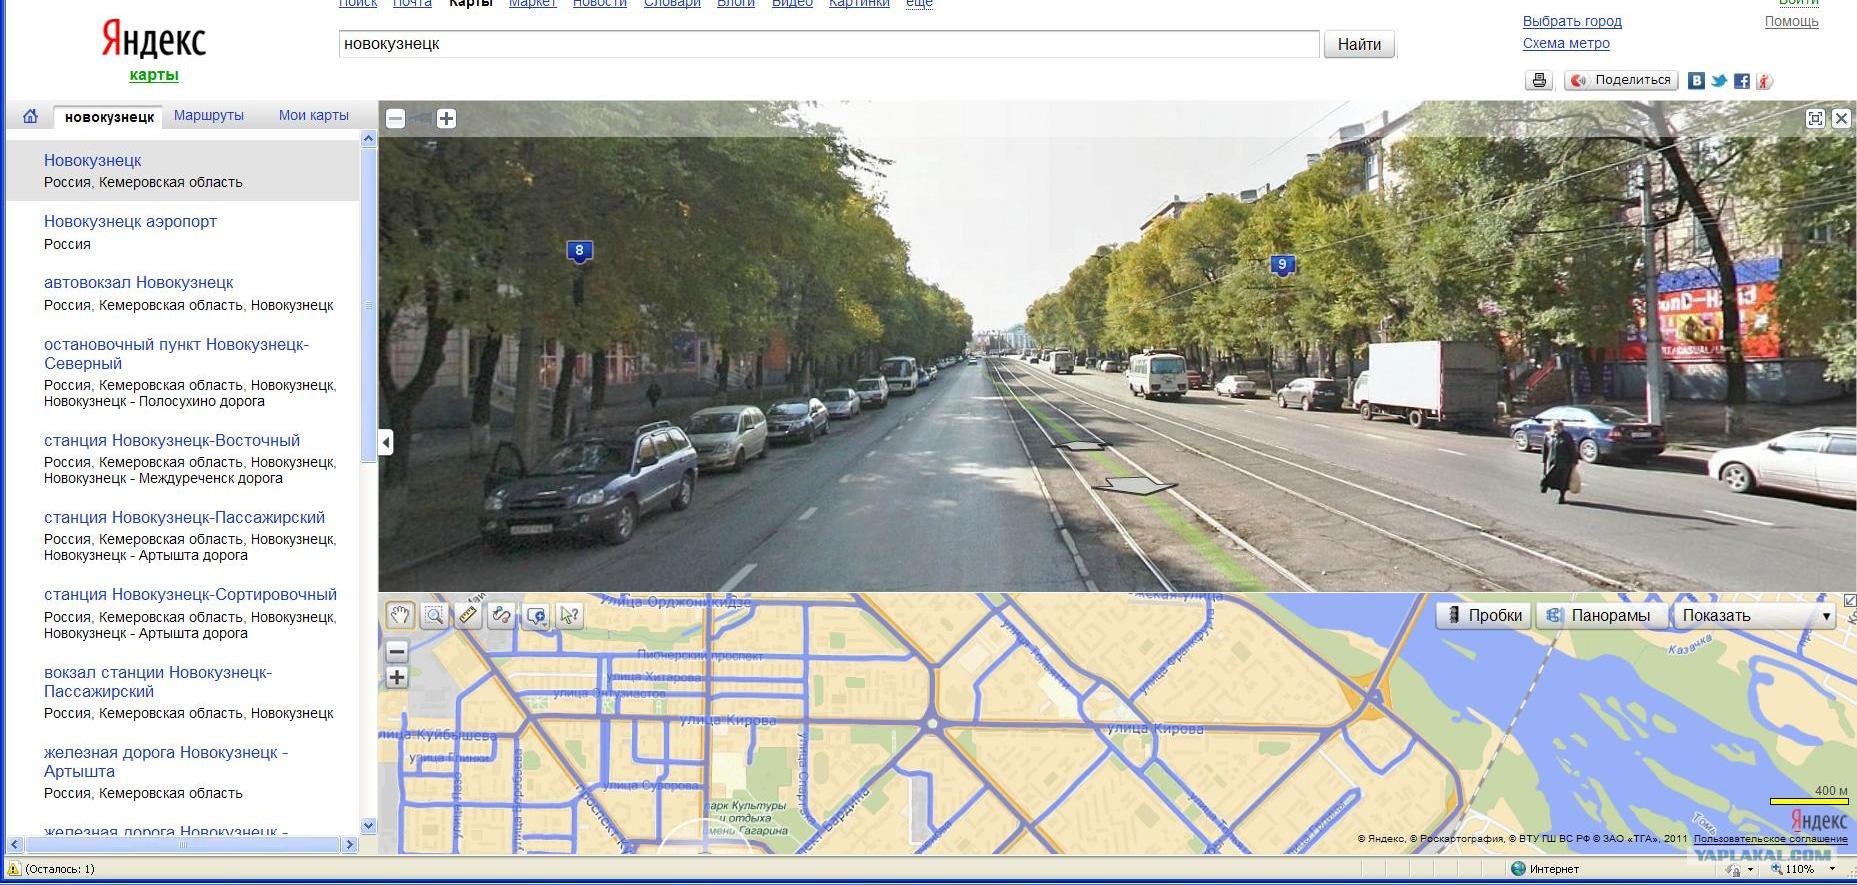 Яндекс панорама улиц